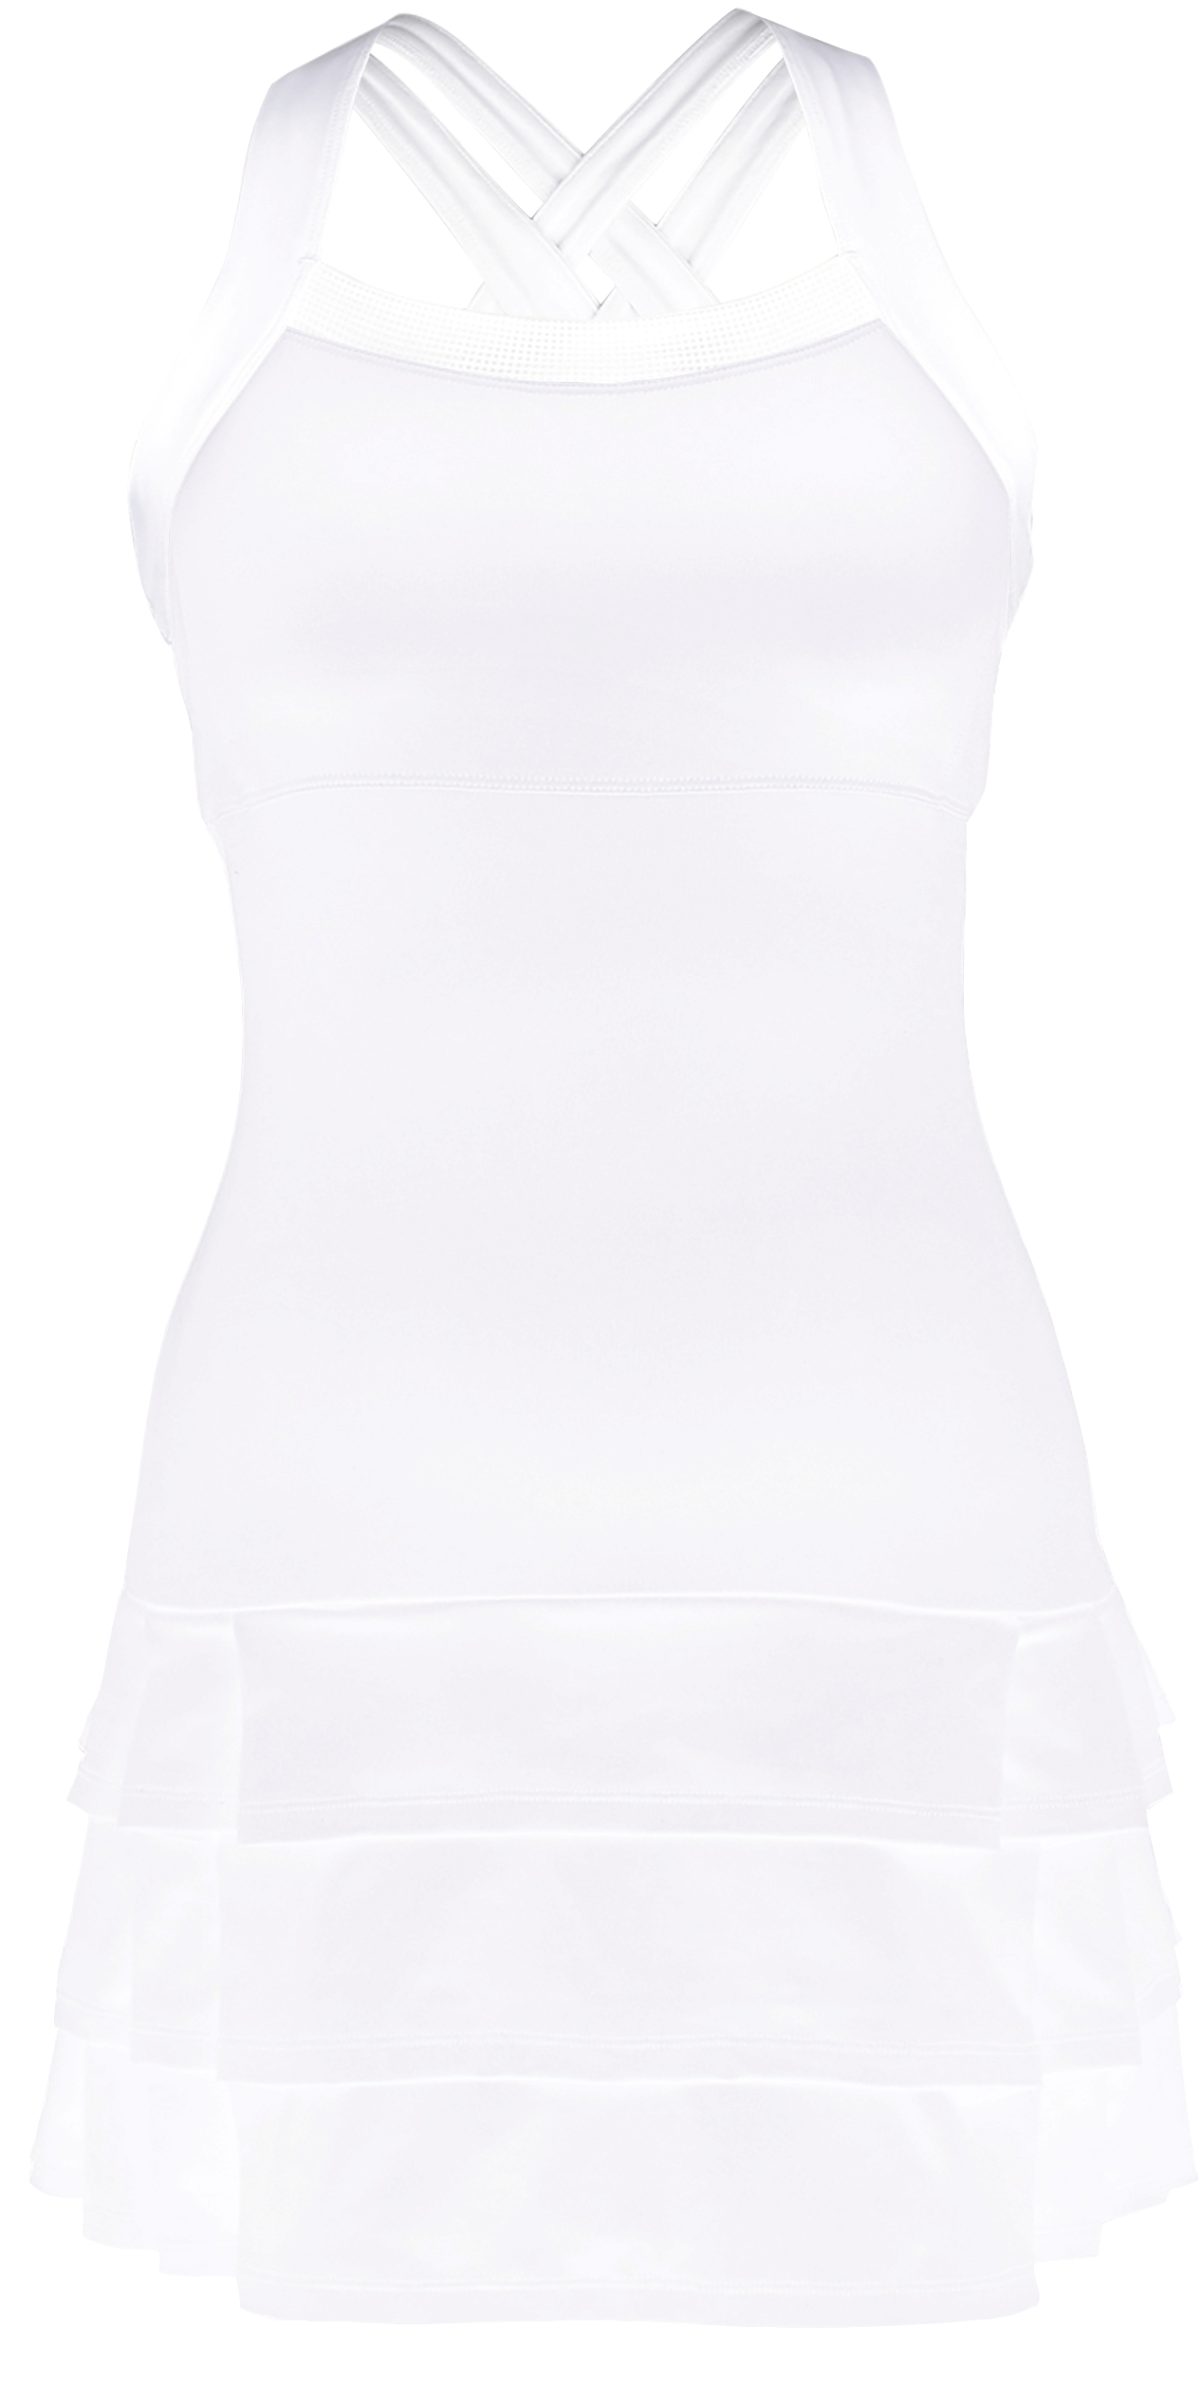 DUC Grace Women's Tennis Dress (White)